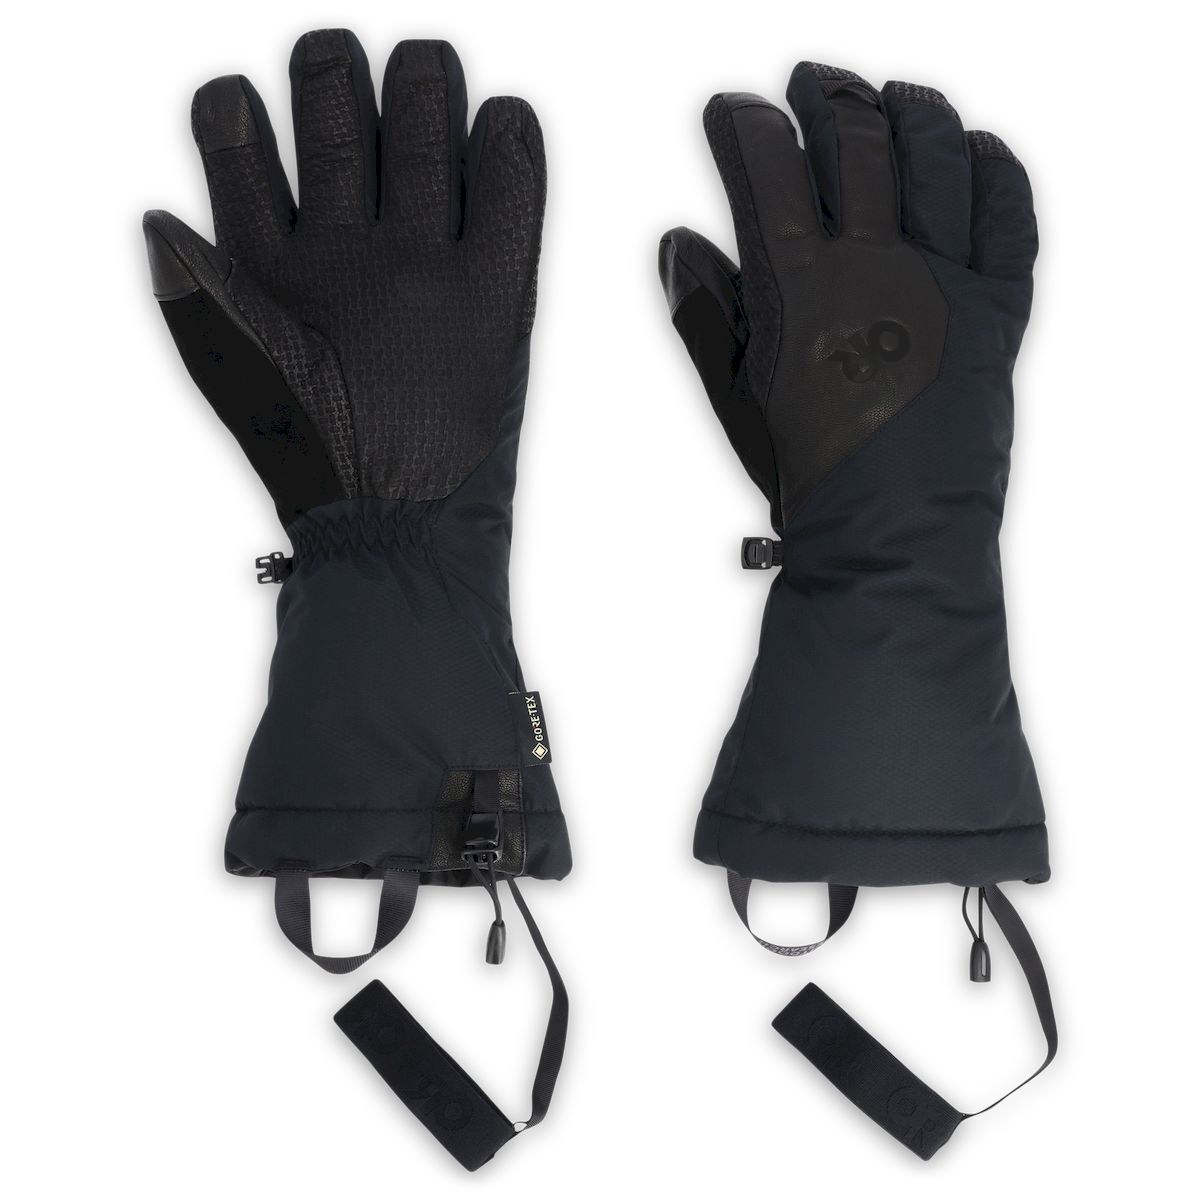 Outdoor Research Super Couloir SensGloves - Ski gloves - Men's